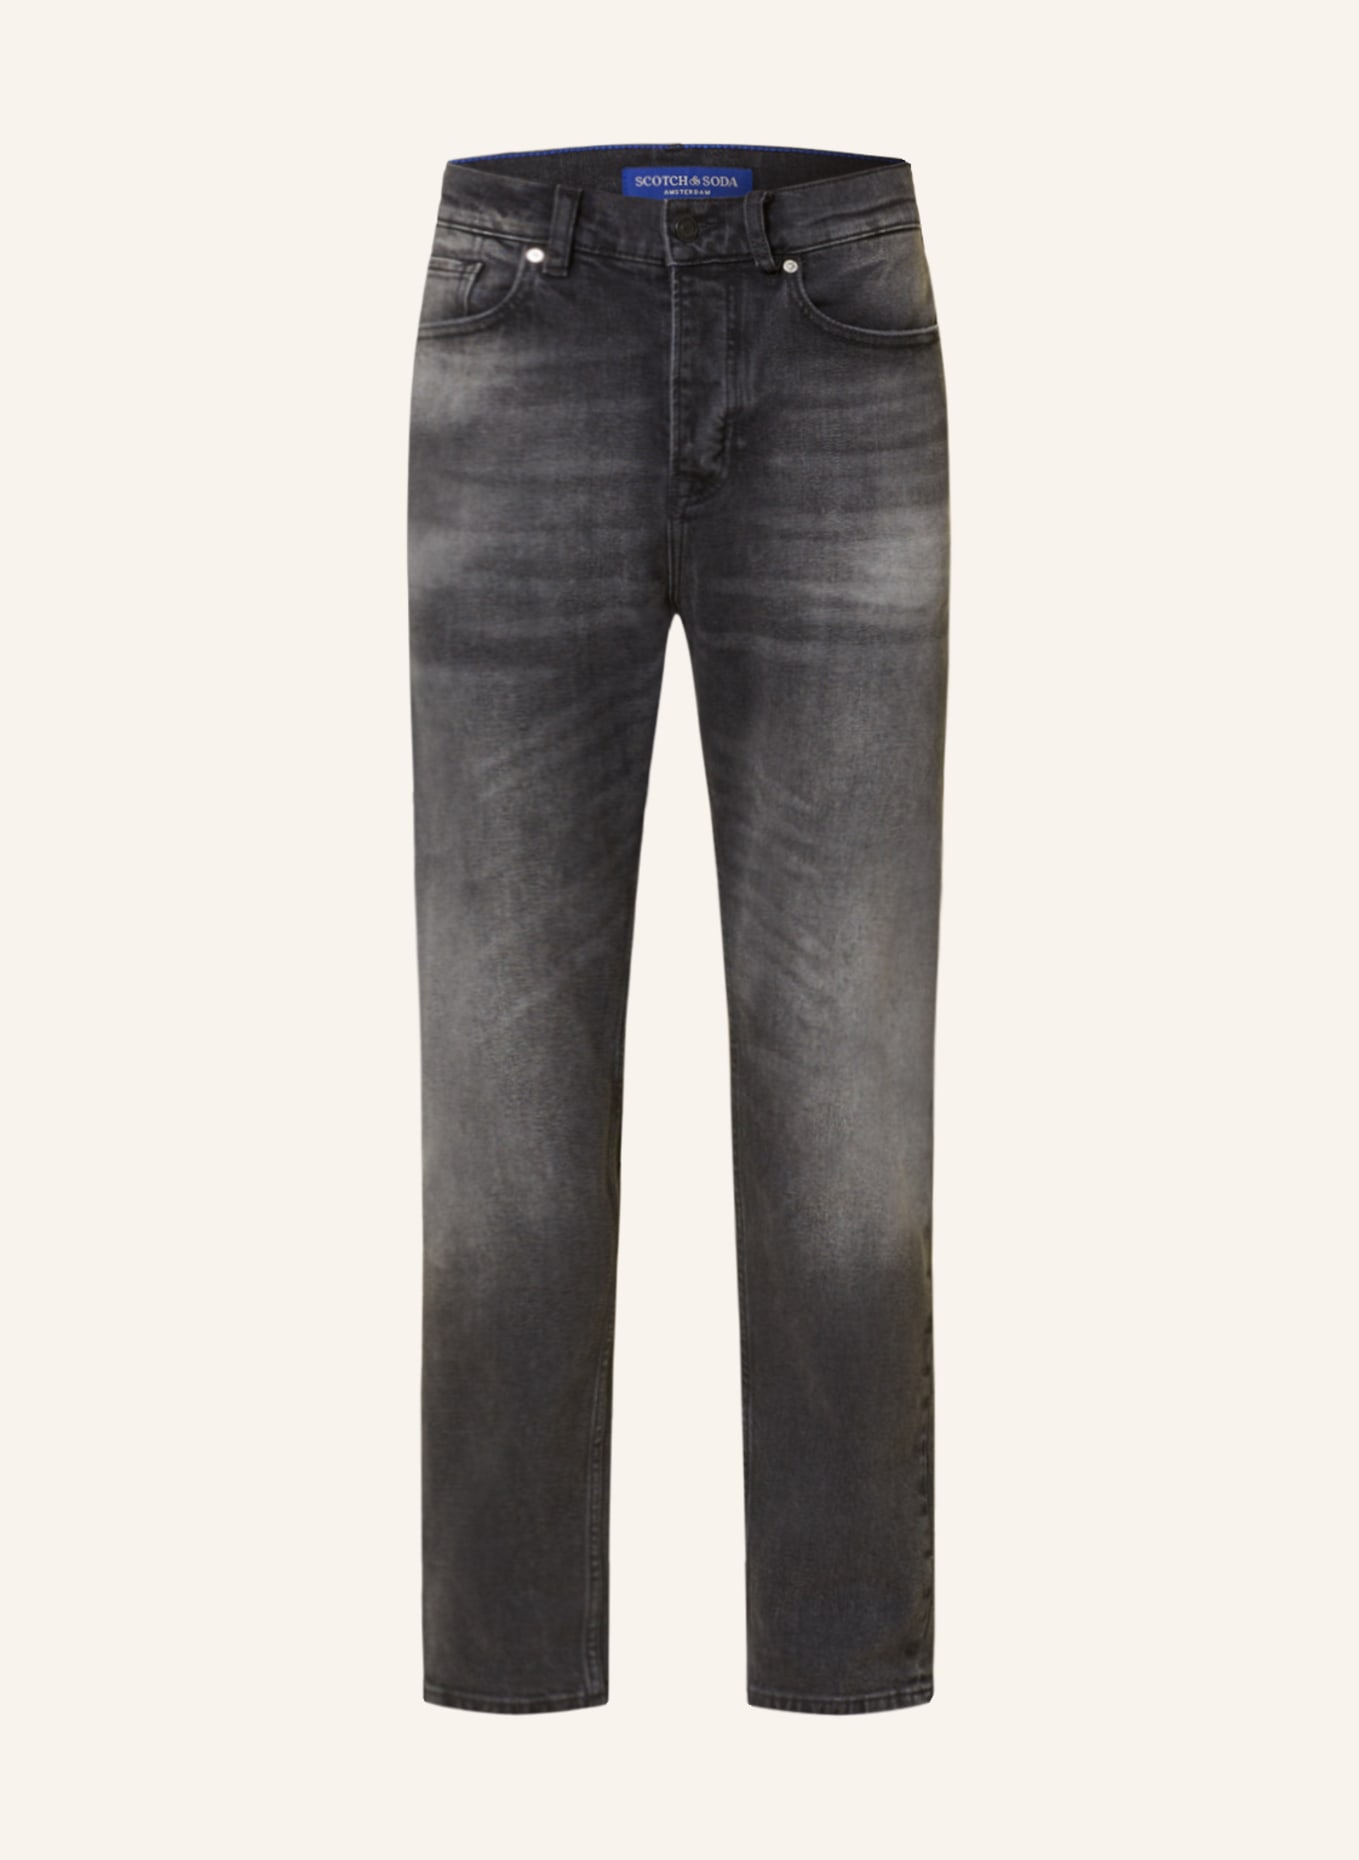 SCOTCH & SODA Jeans THE DROP Regular Tapered Fit, Farbe: 6297 Nightlife (Bild 1)